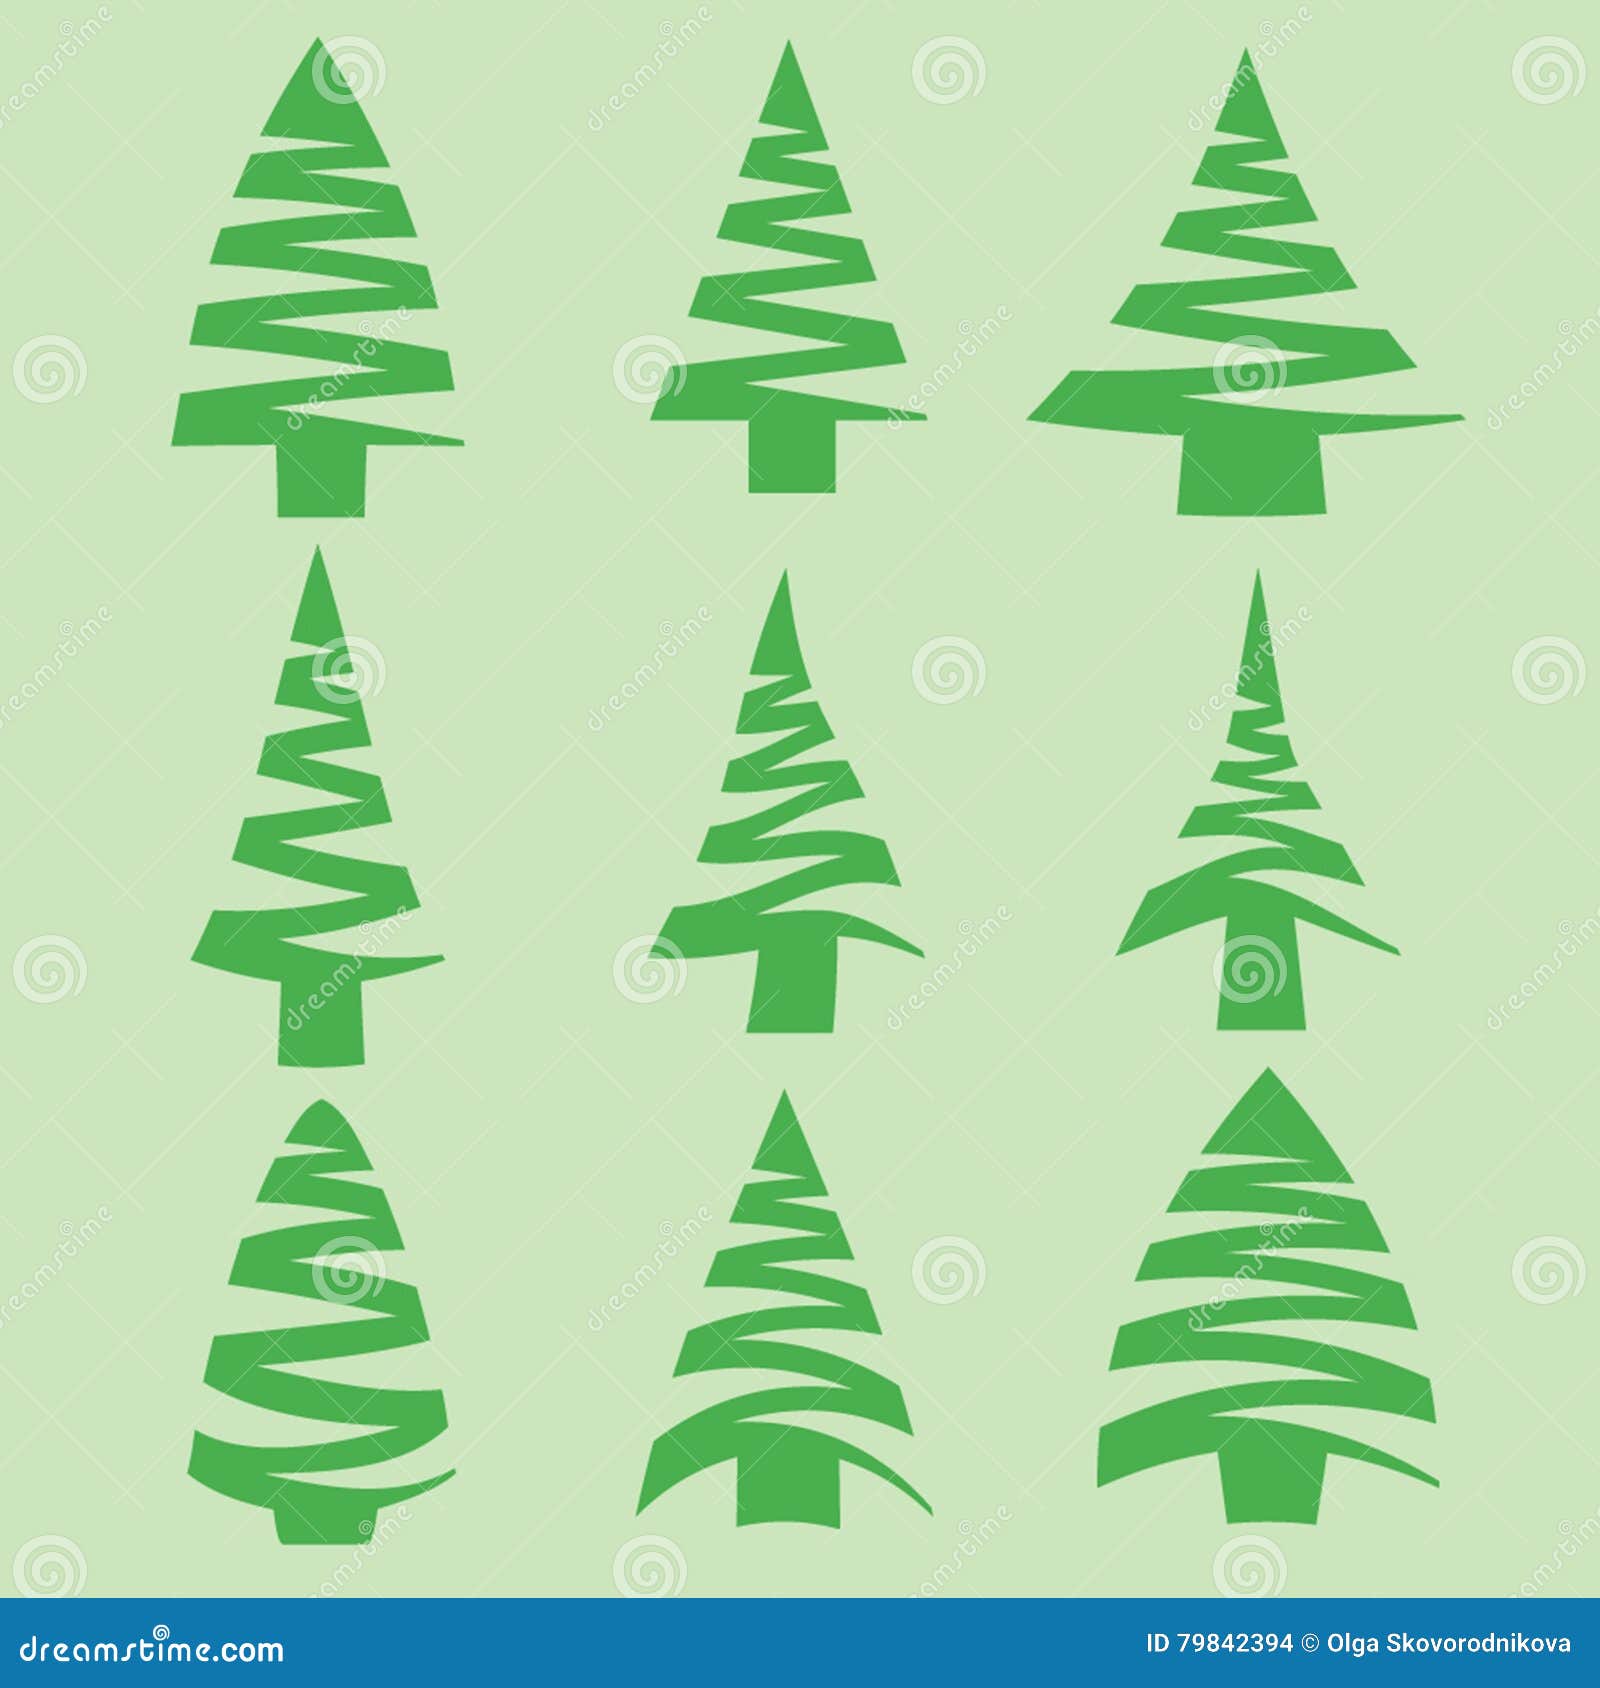 Set of fir trees stock vector. Illustration of green - 79842394